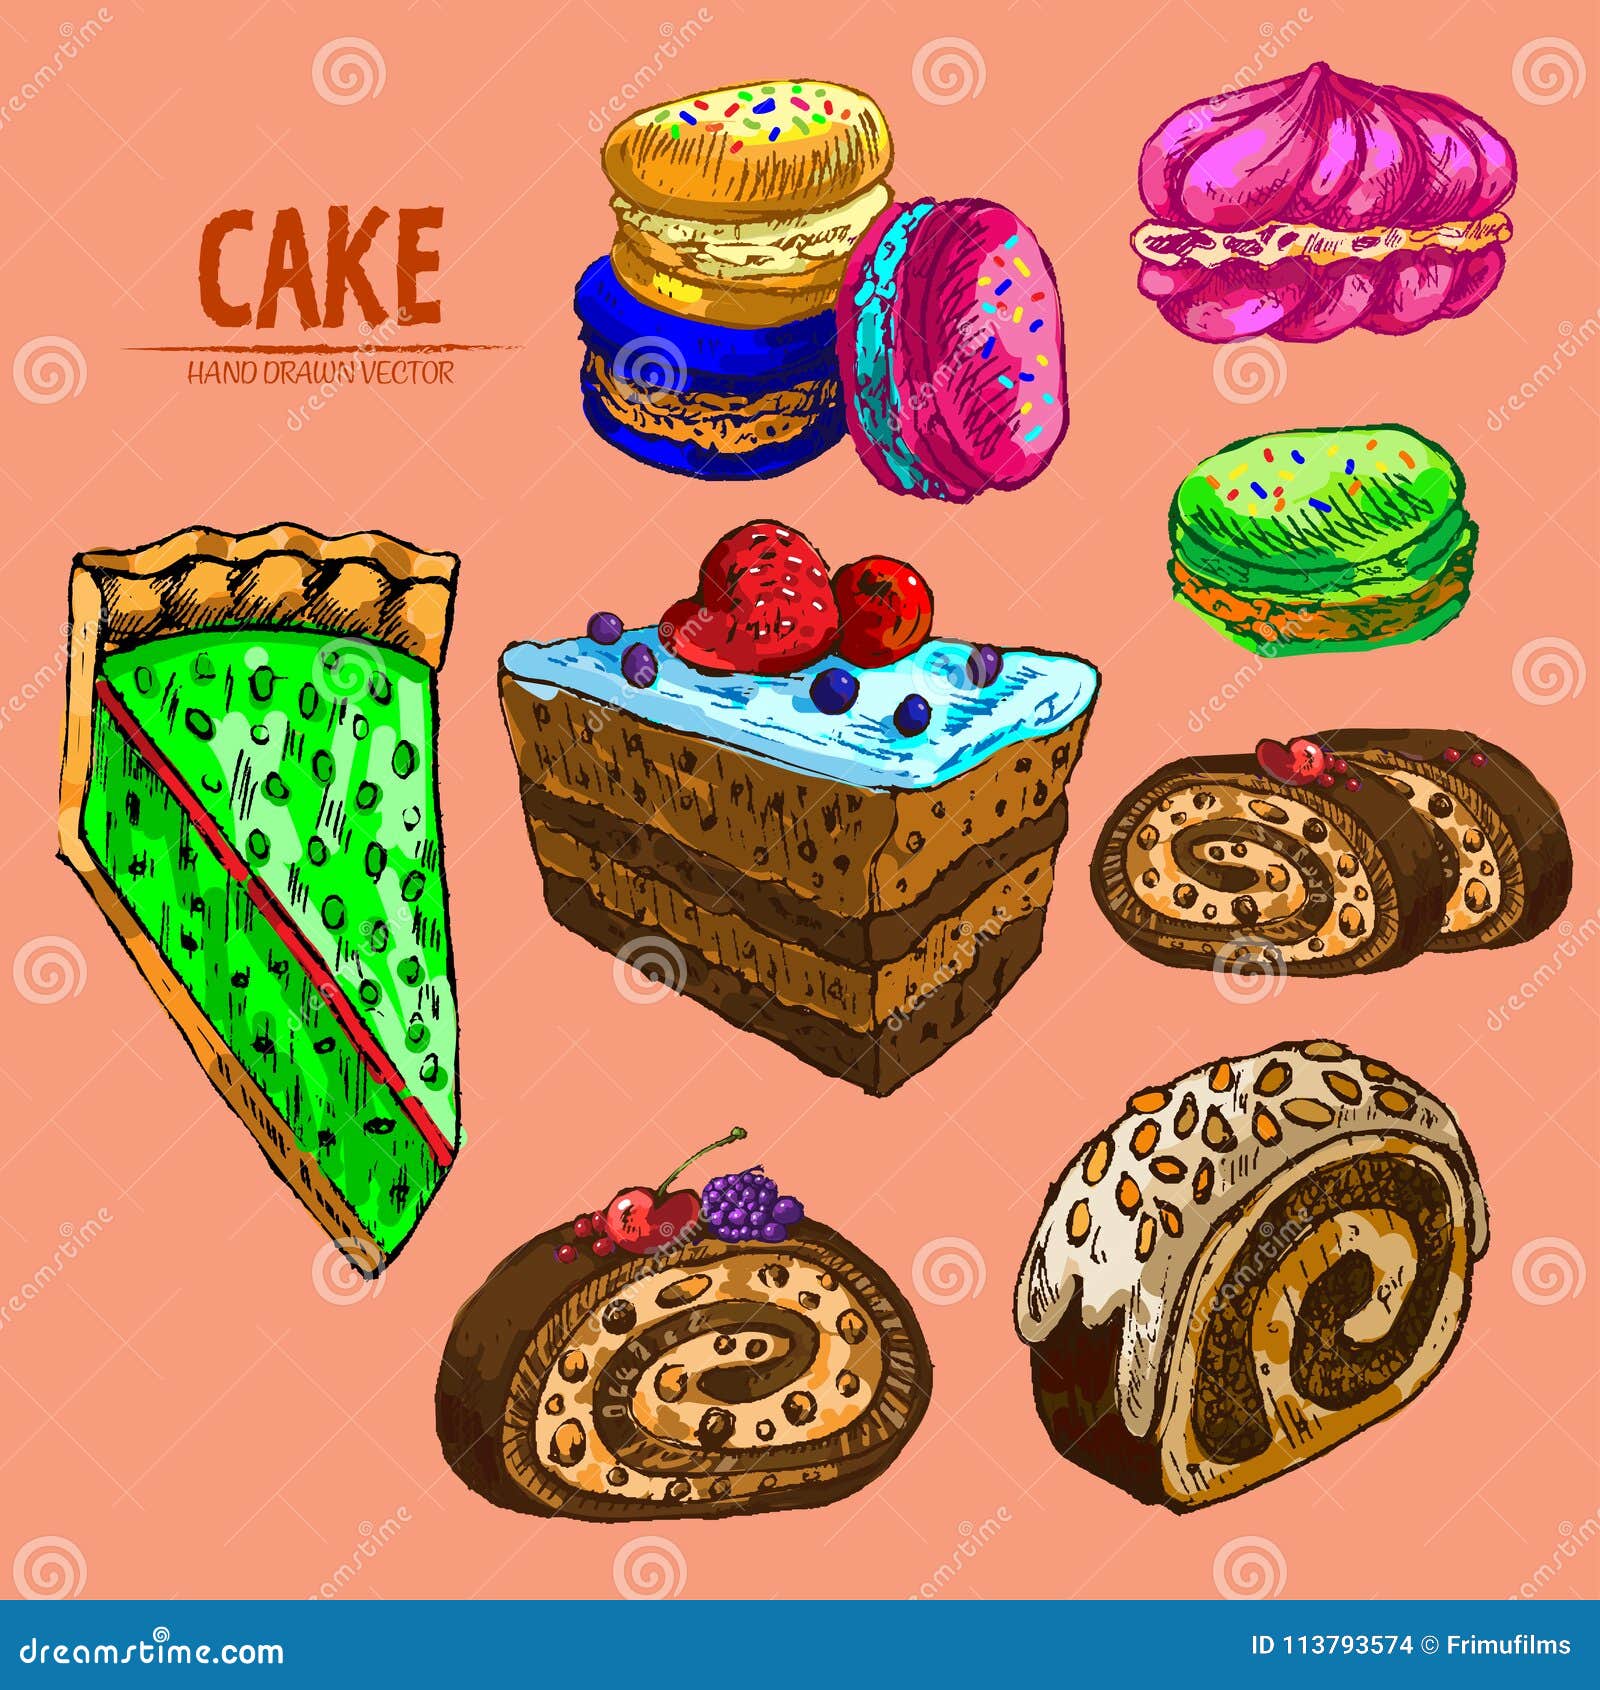 Cake roll procreateprocreateart cookcake  foodfoodiefoodillustrationartsketchbooksketchdrawingdigitalillustration   Instagram